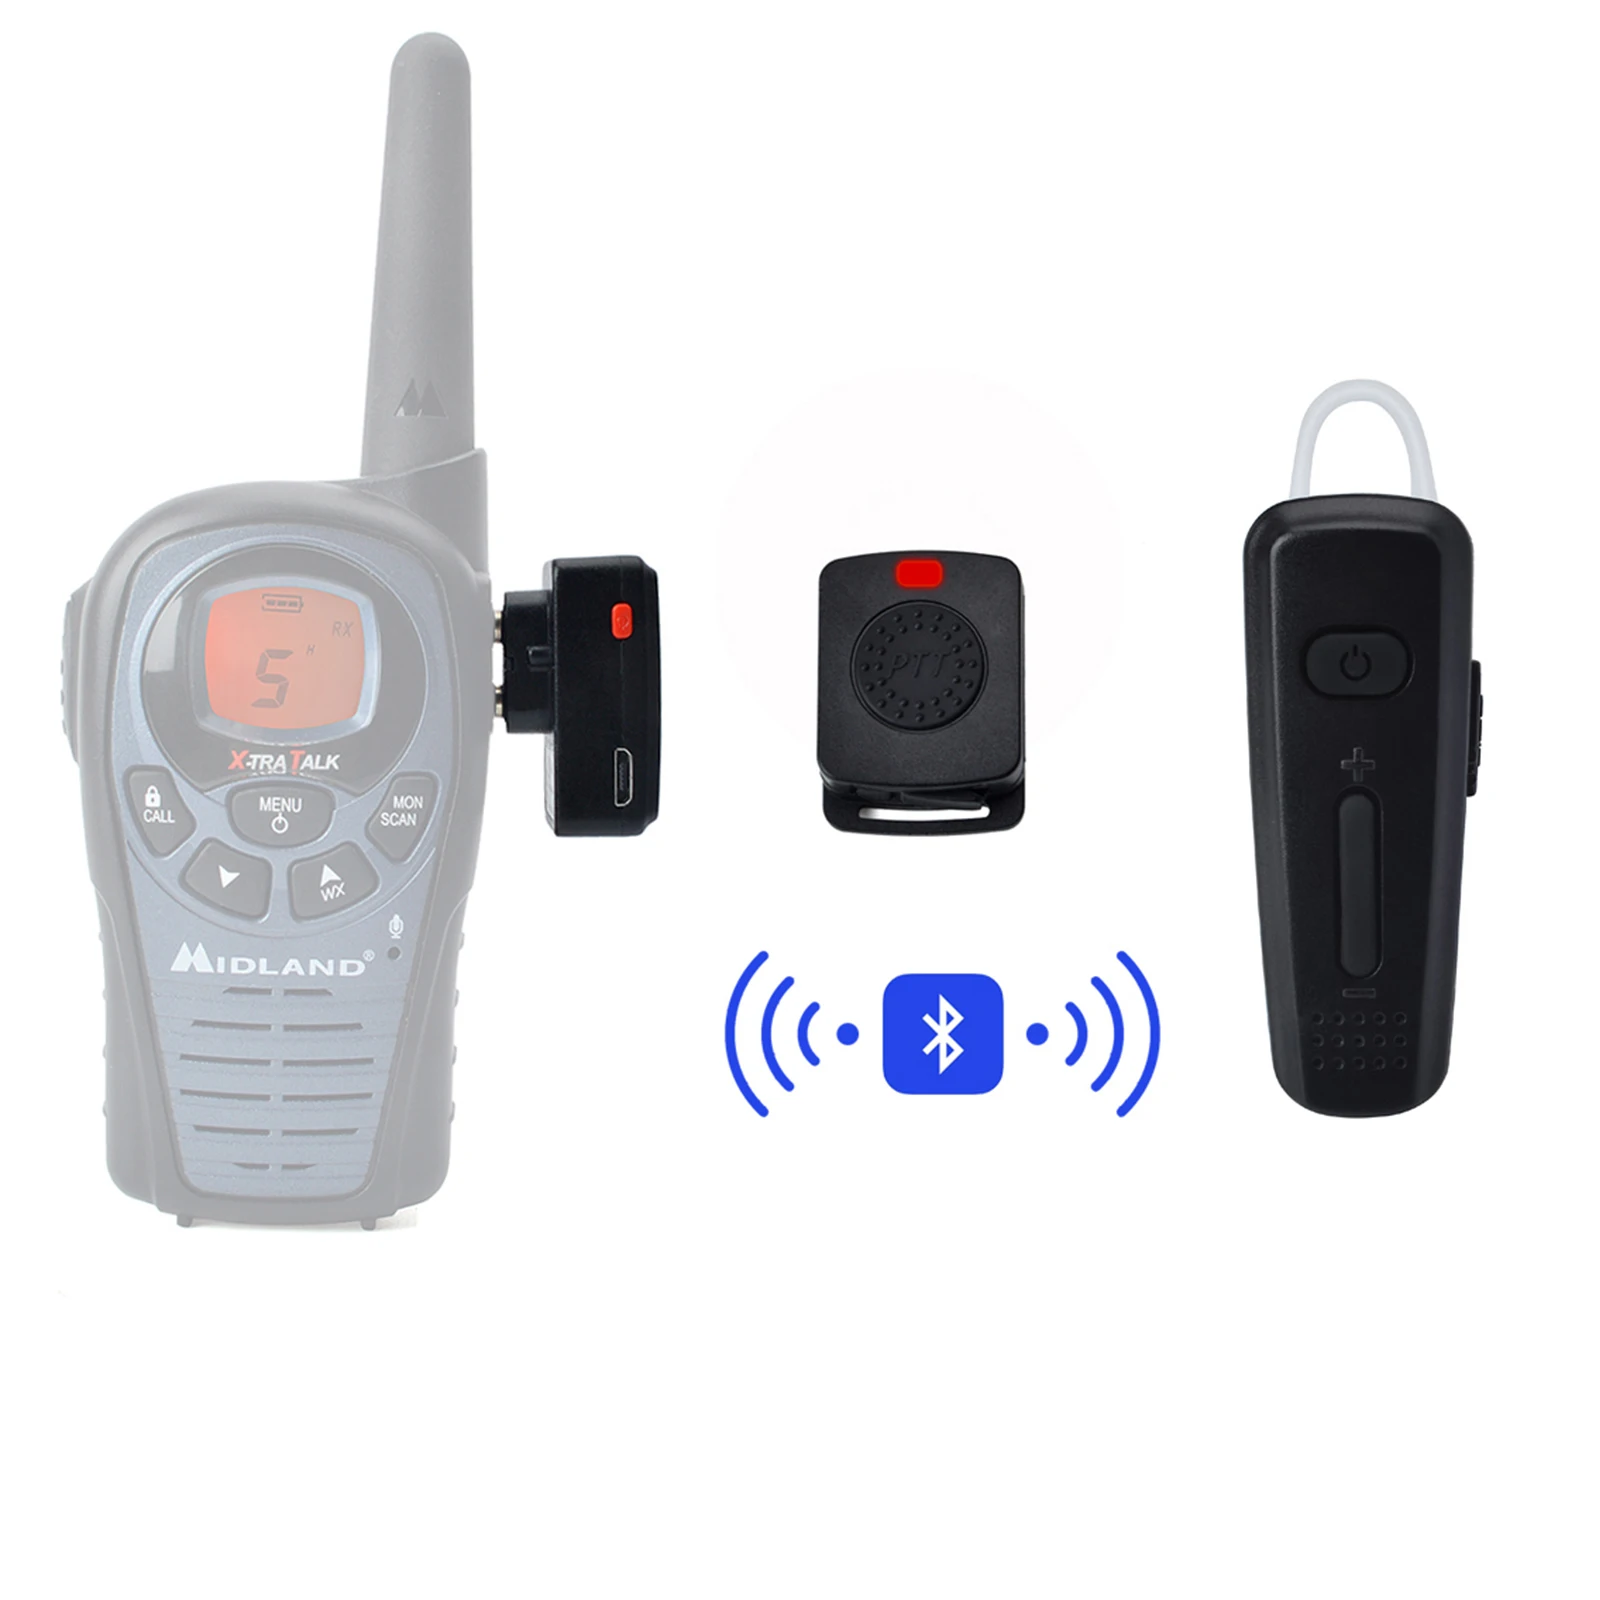 HYS Wireless Bluetooth Headset Earpiece for  Walkie Talkie Icom V8 V80 V80E V82 V85  Midland GXT1000VP4 LXT600VP3 GXT1050VP4